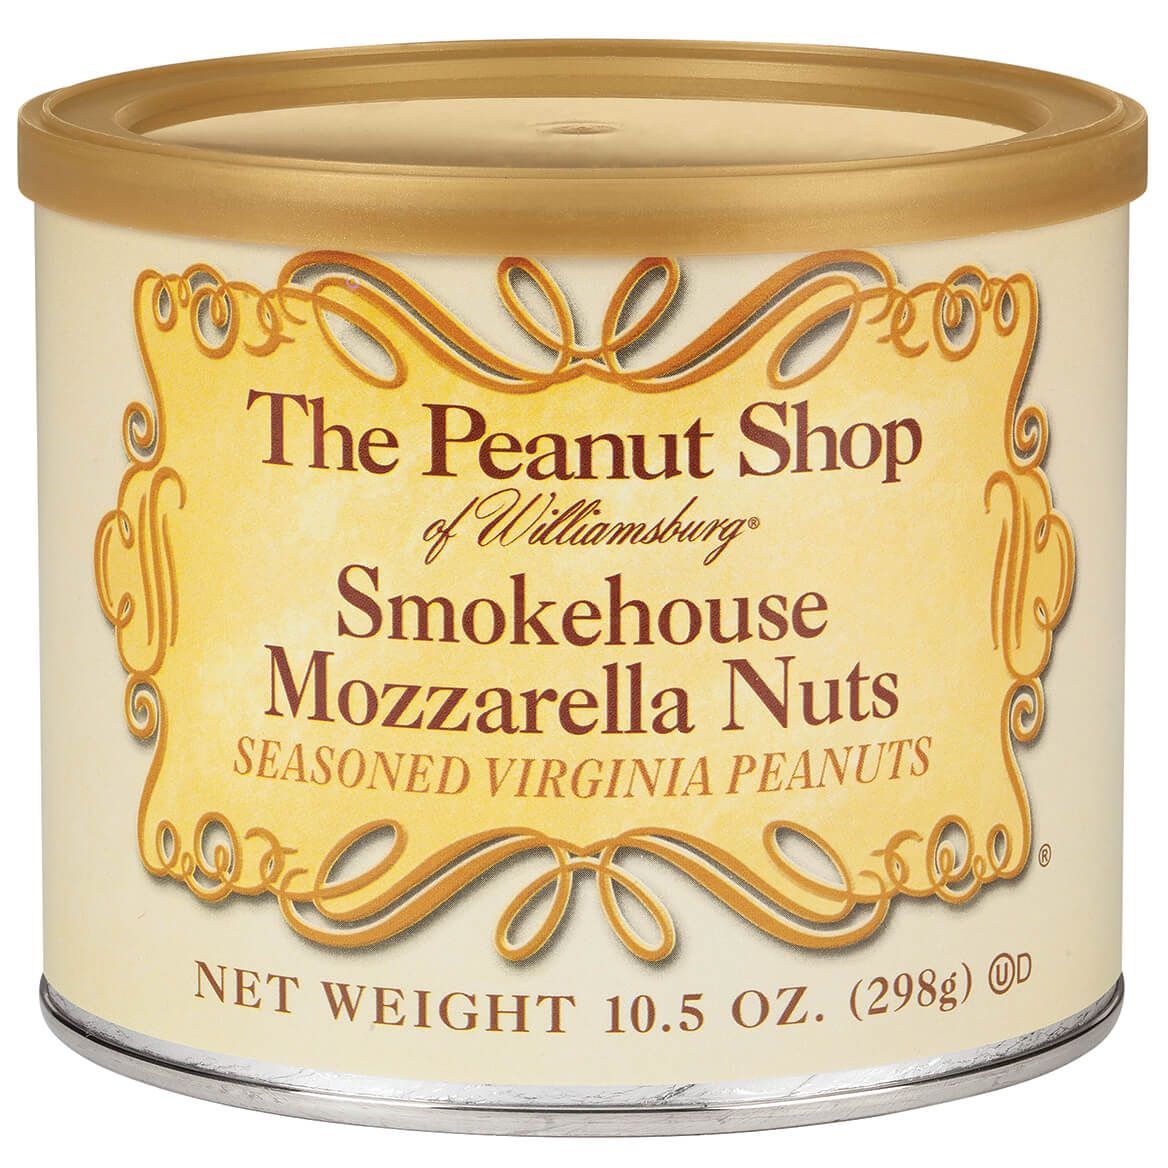 The Peanut Shop Smokehouse Mozzarella Peanuts + '-' + 374329